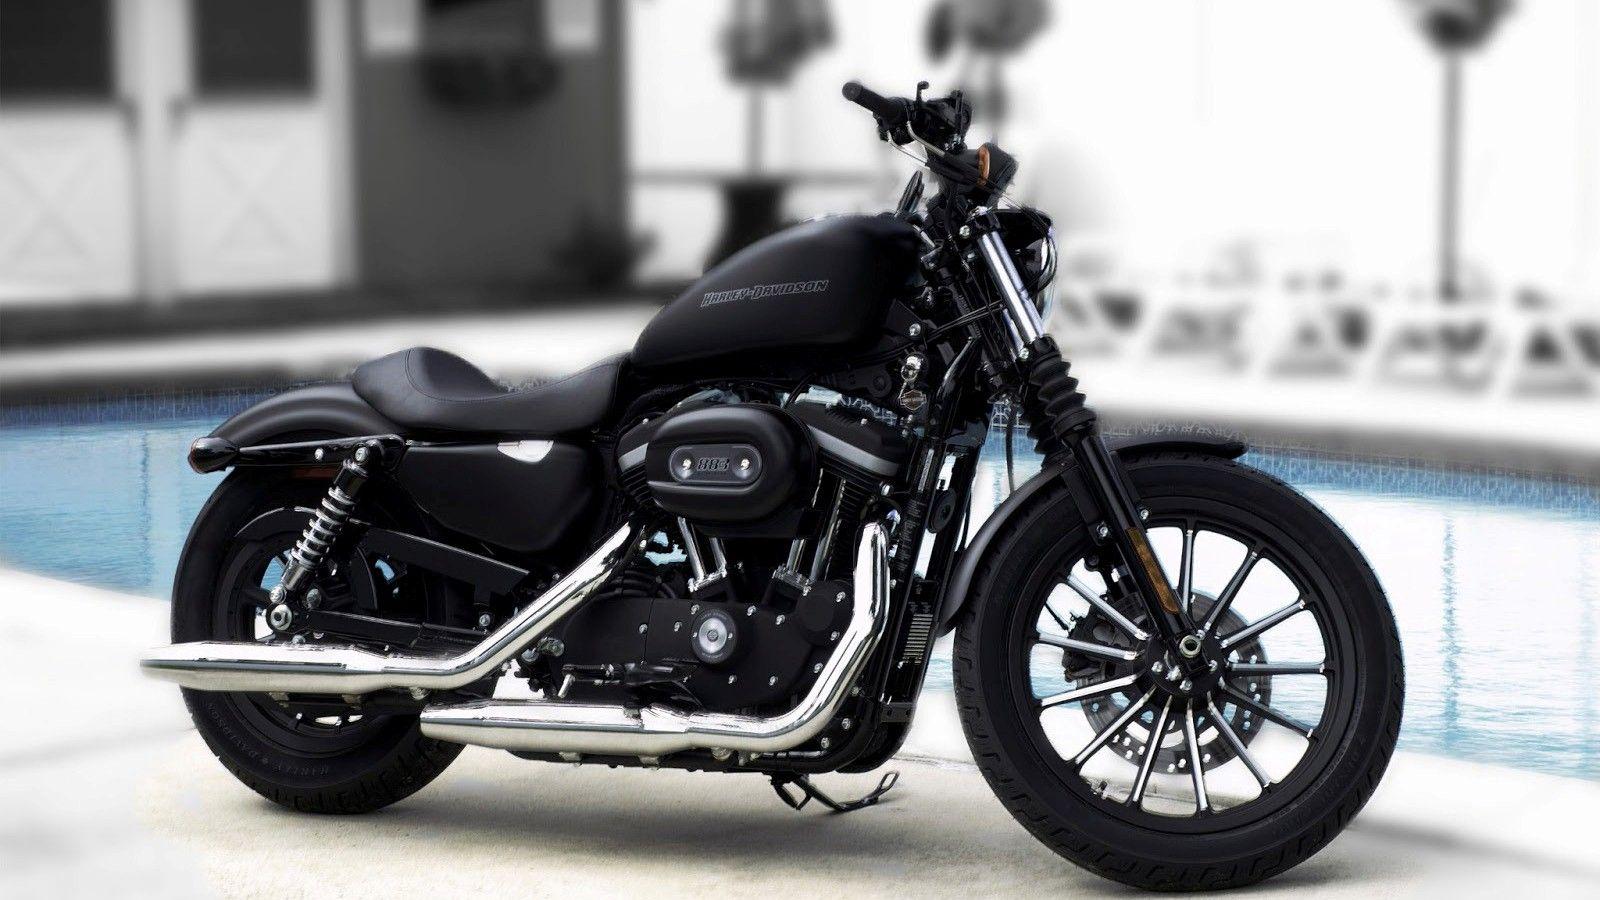 Superb Harley Davidson Iron 883 Black Bike